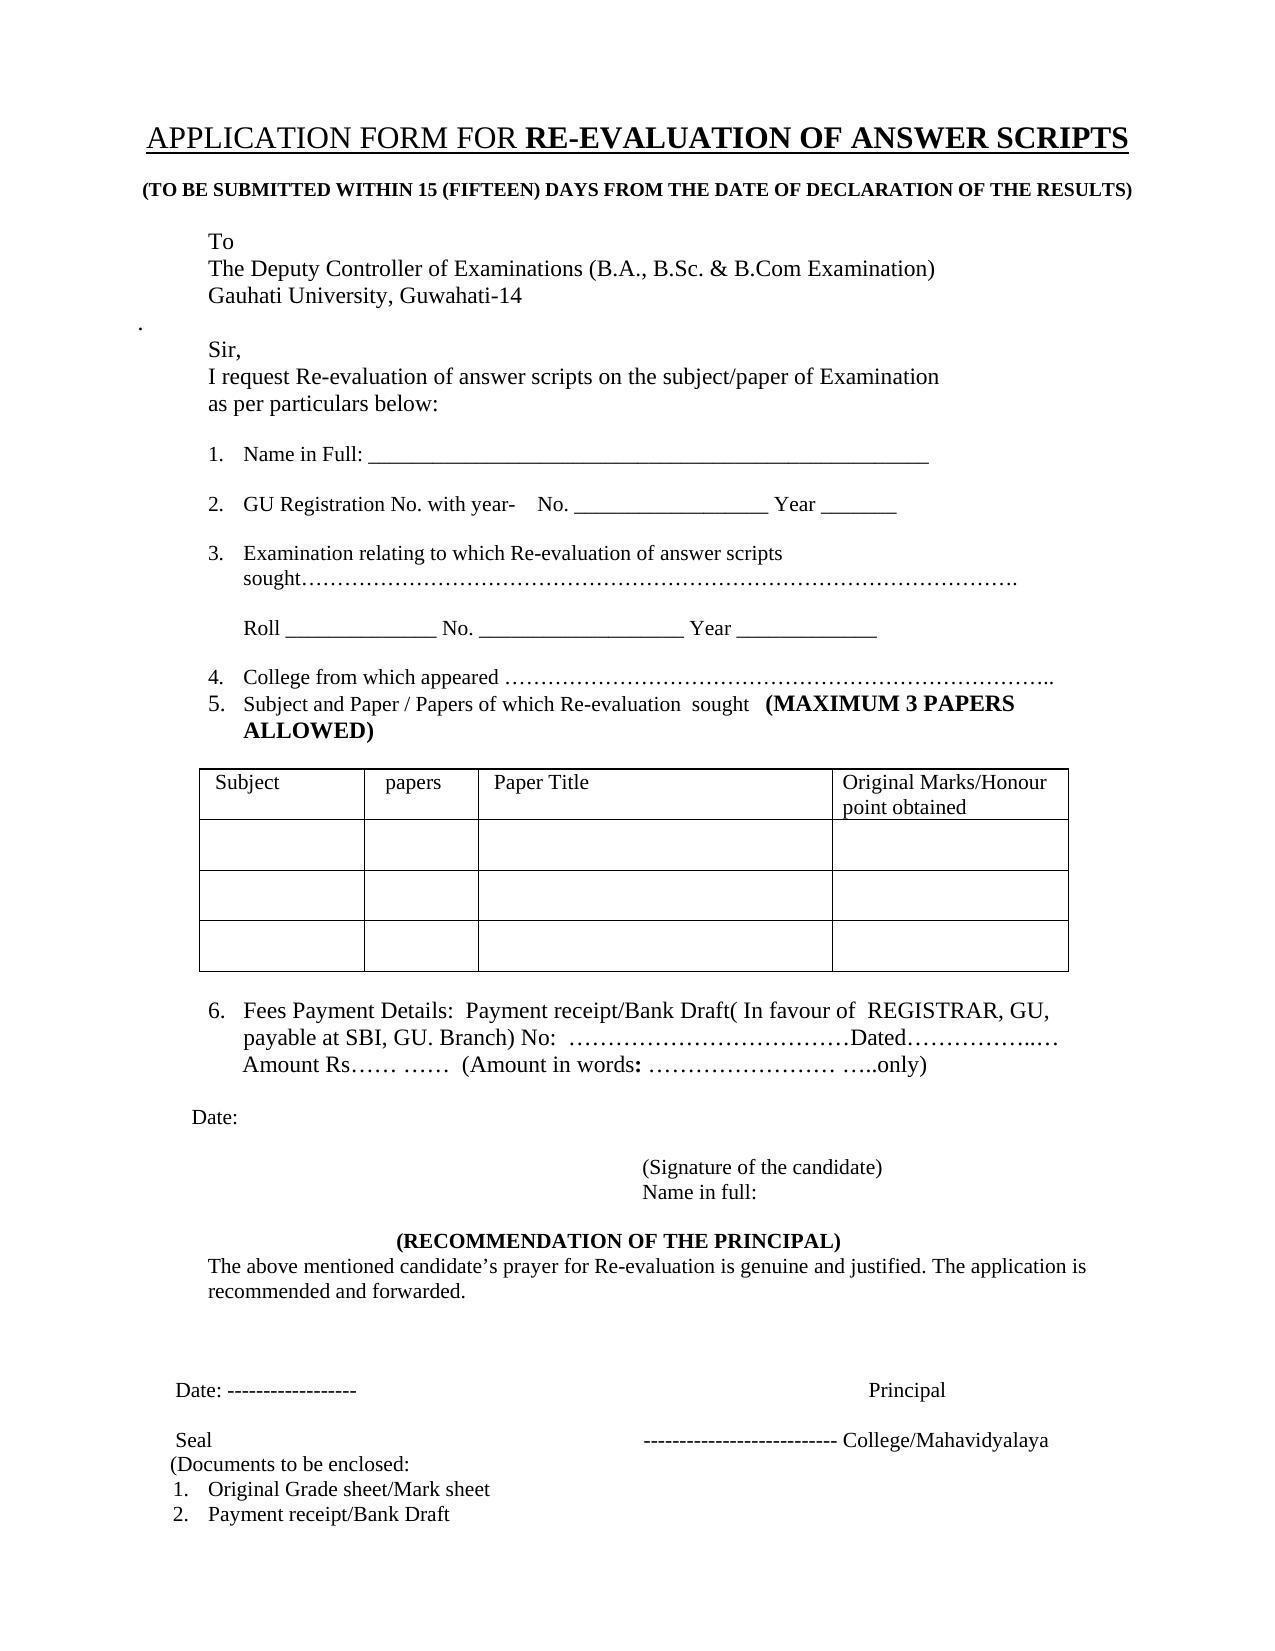 Gauhati University (GU) Re-evaluation Application Form - Page 1